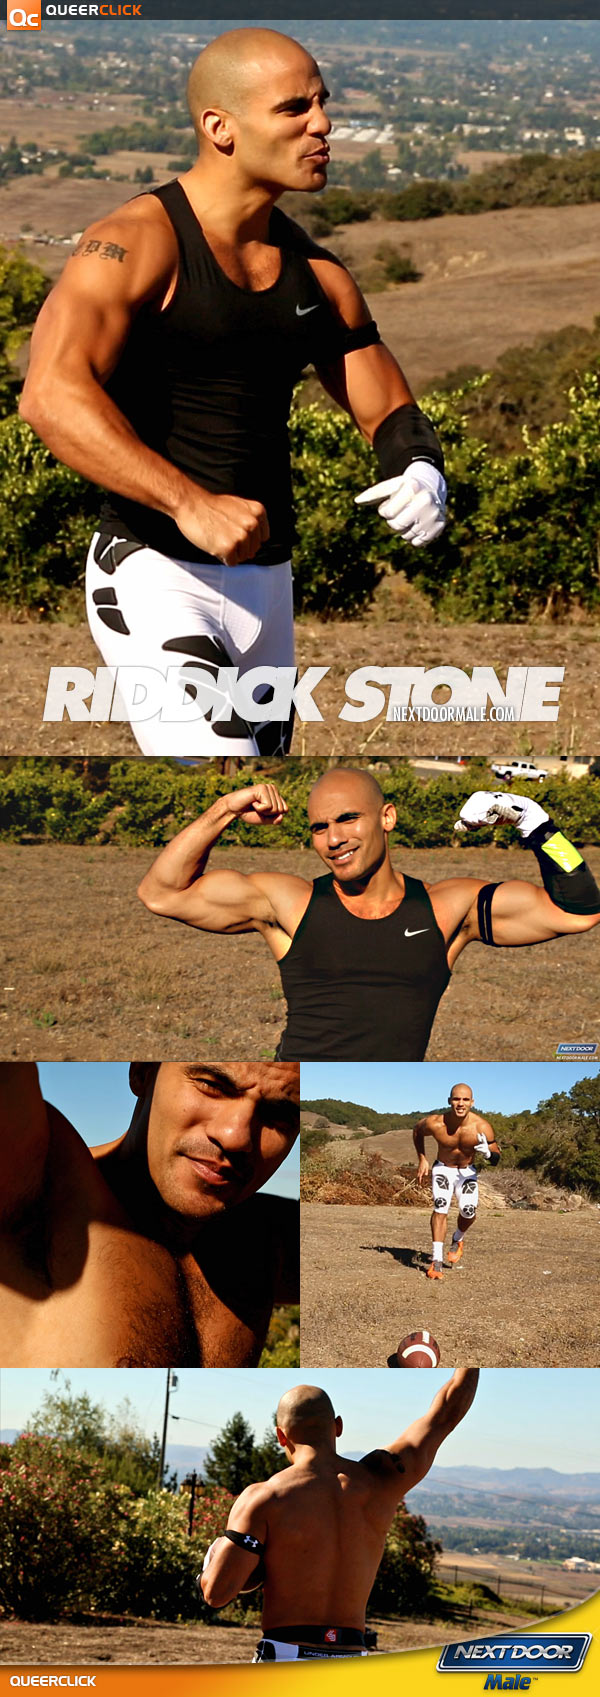 Next Door Male: Riddick Stone